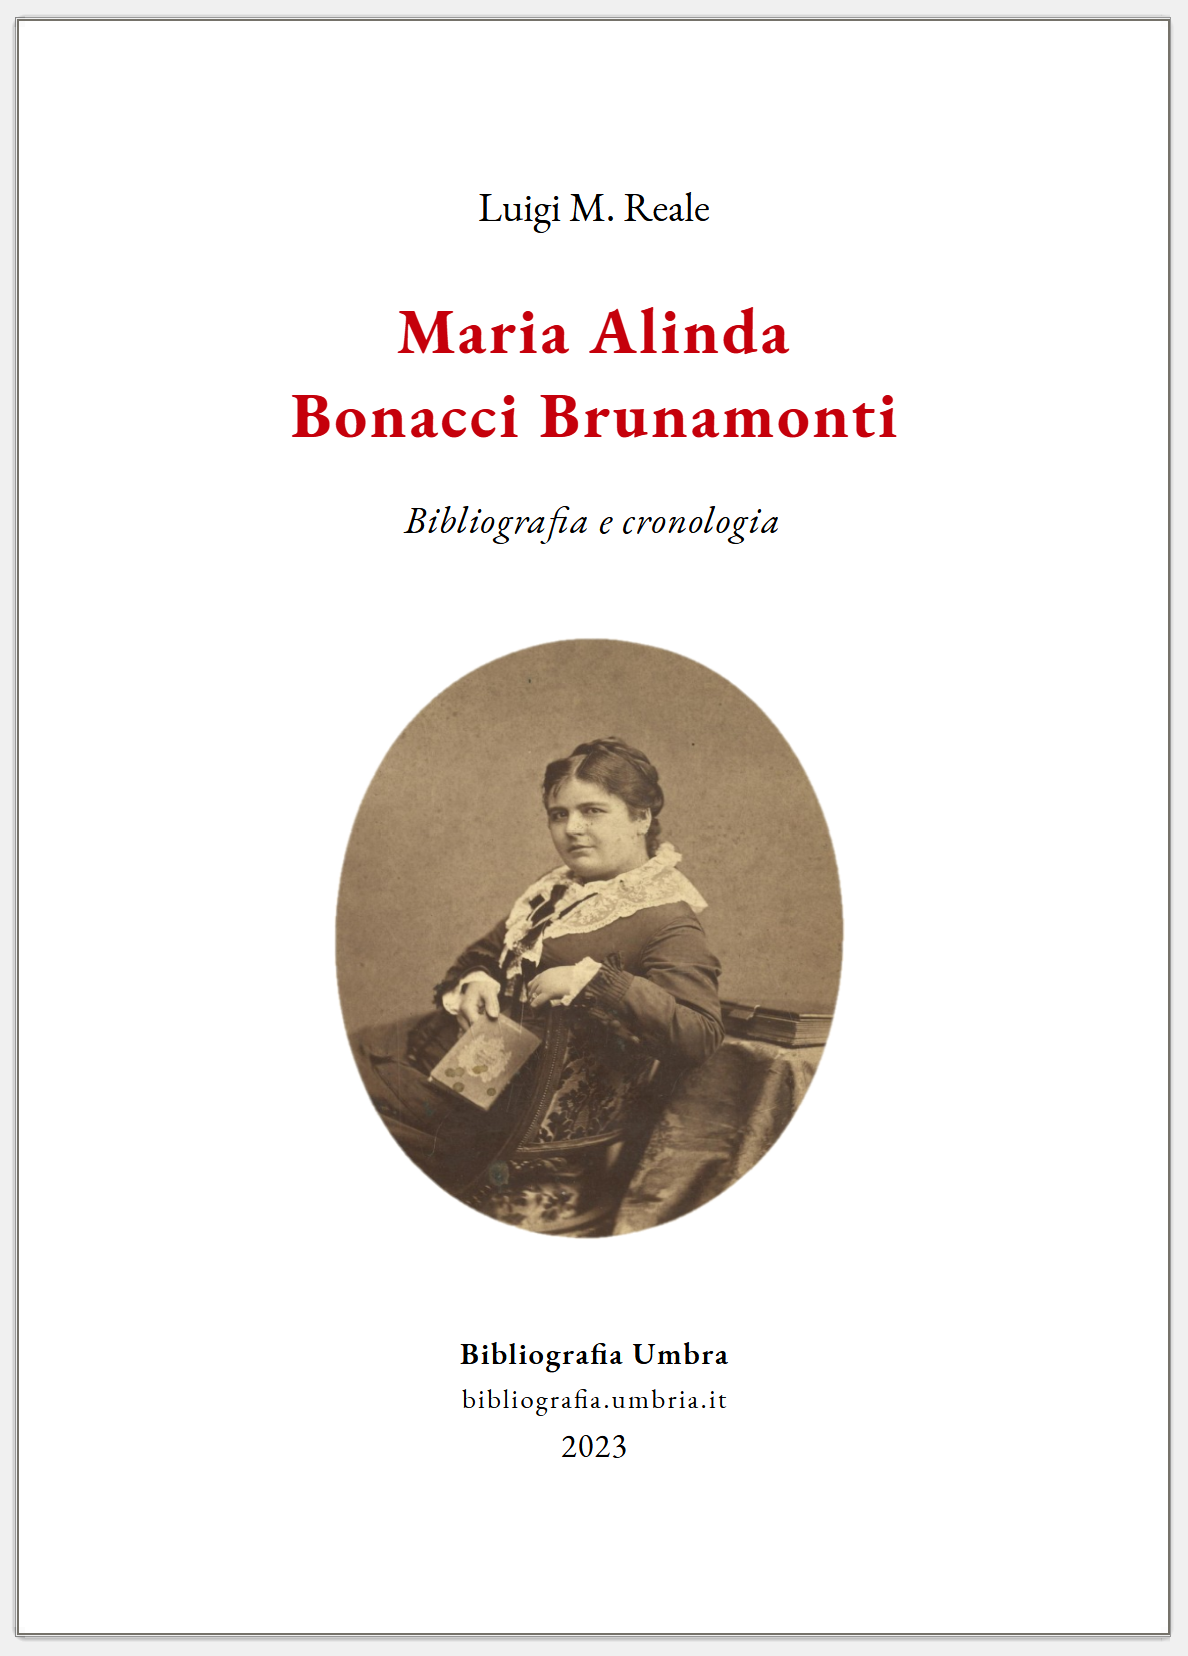 Copertina di Luigi M. Reale - Bibliografia di M. A. Bonacci Brunamonti